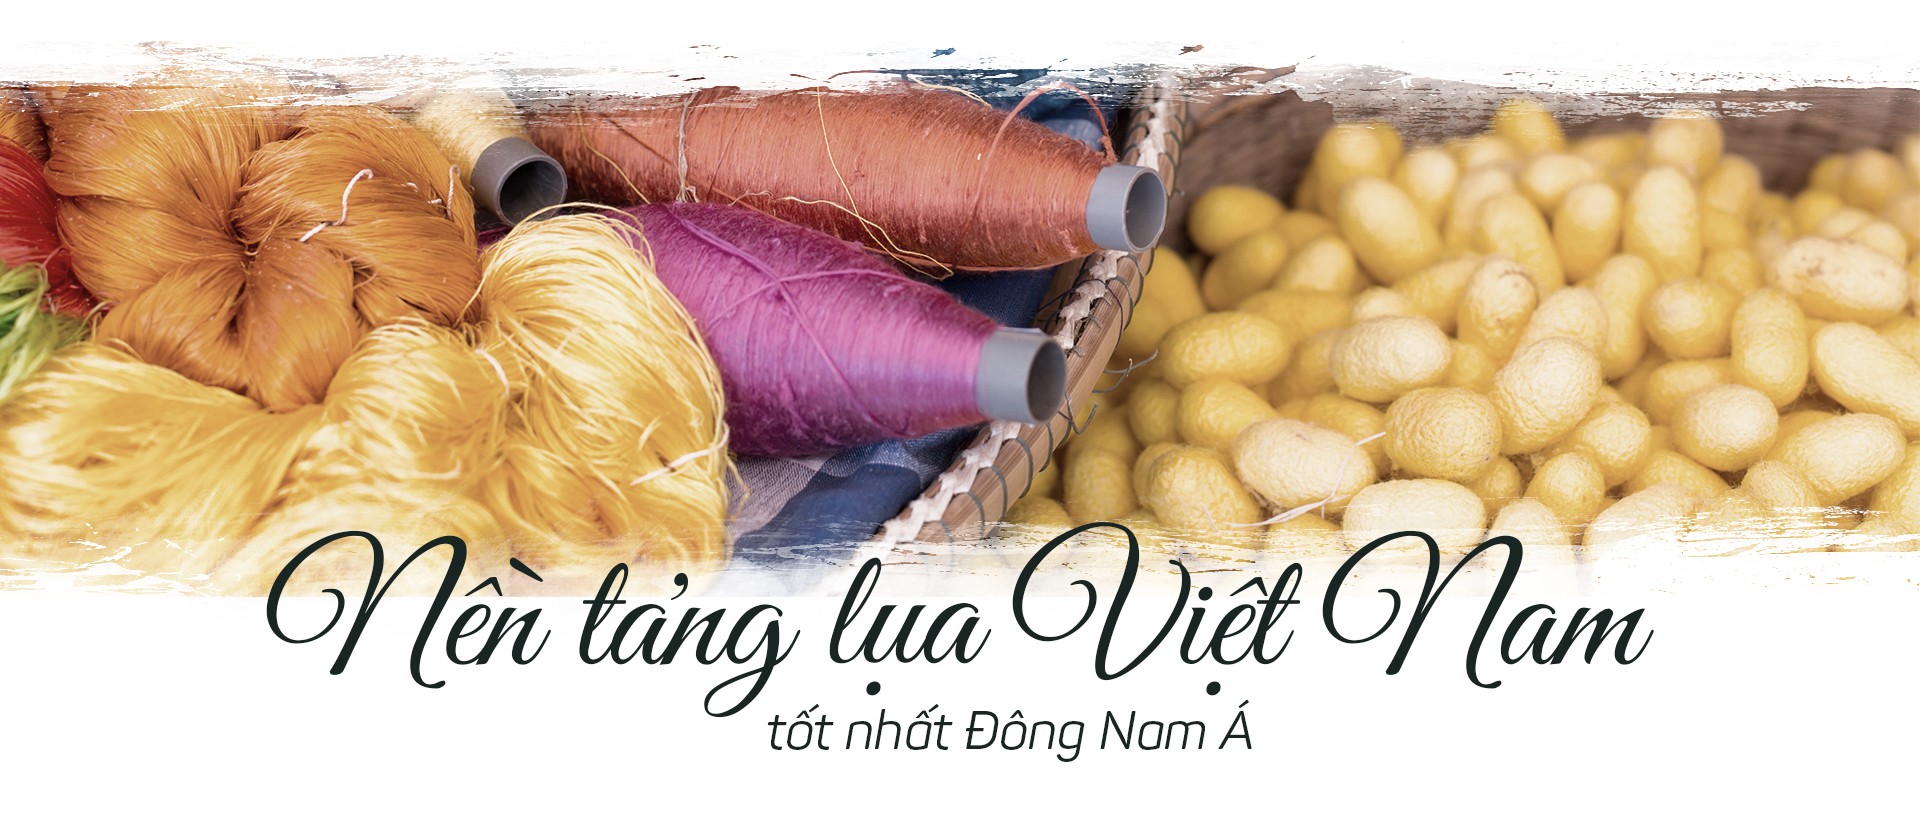 Vietnamese silk